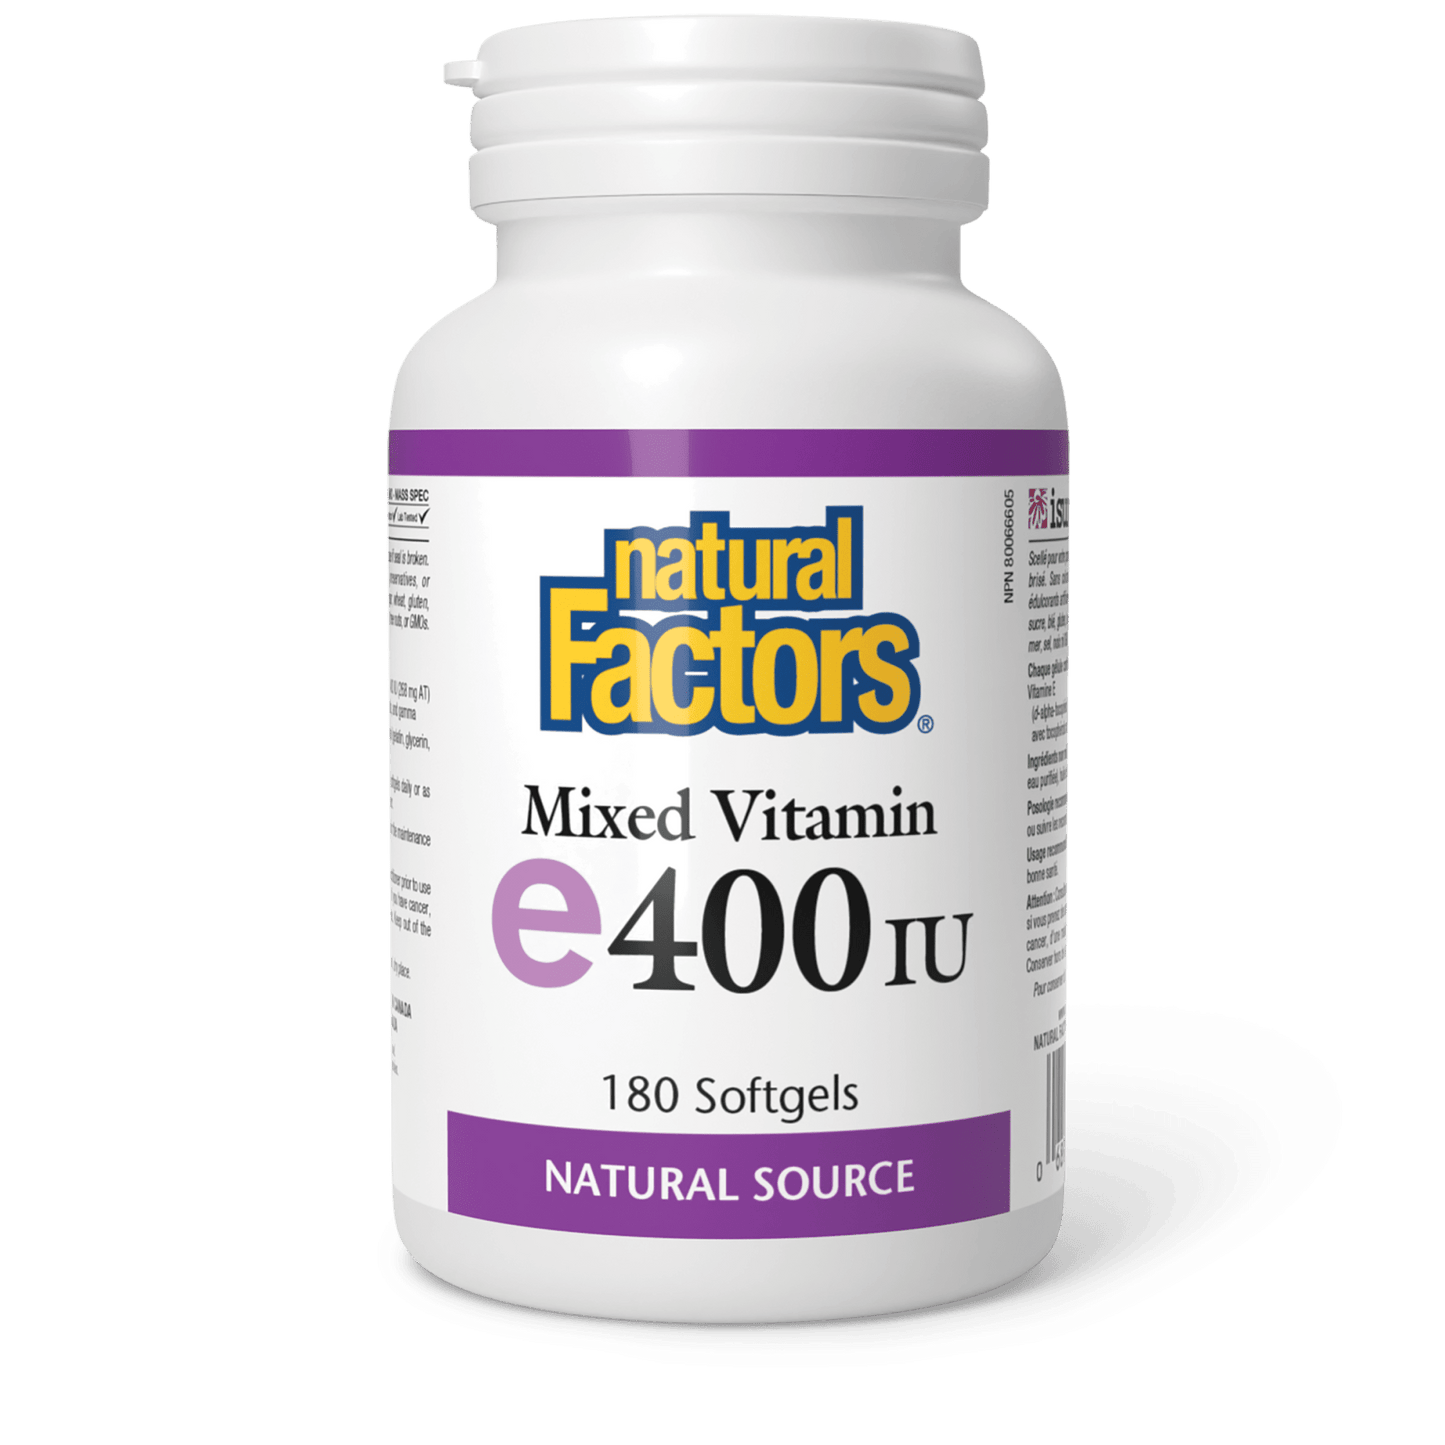 Mixed Vitamin E 400 IU, Natural source, Natural Factors|v|image|1422